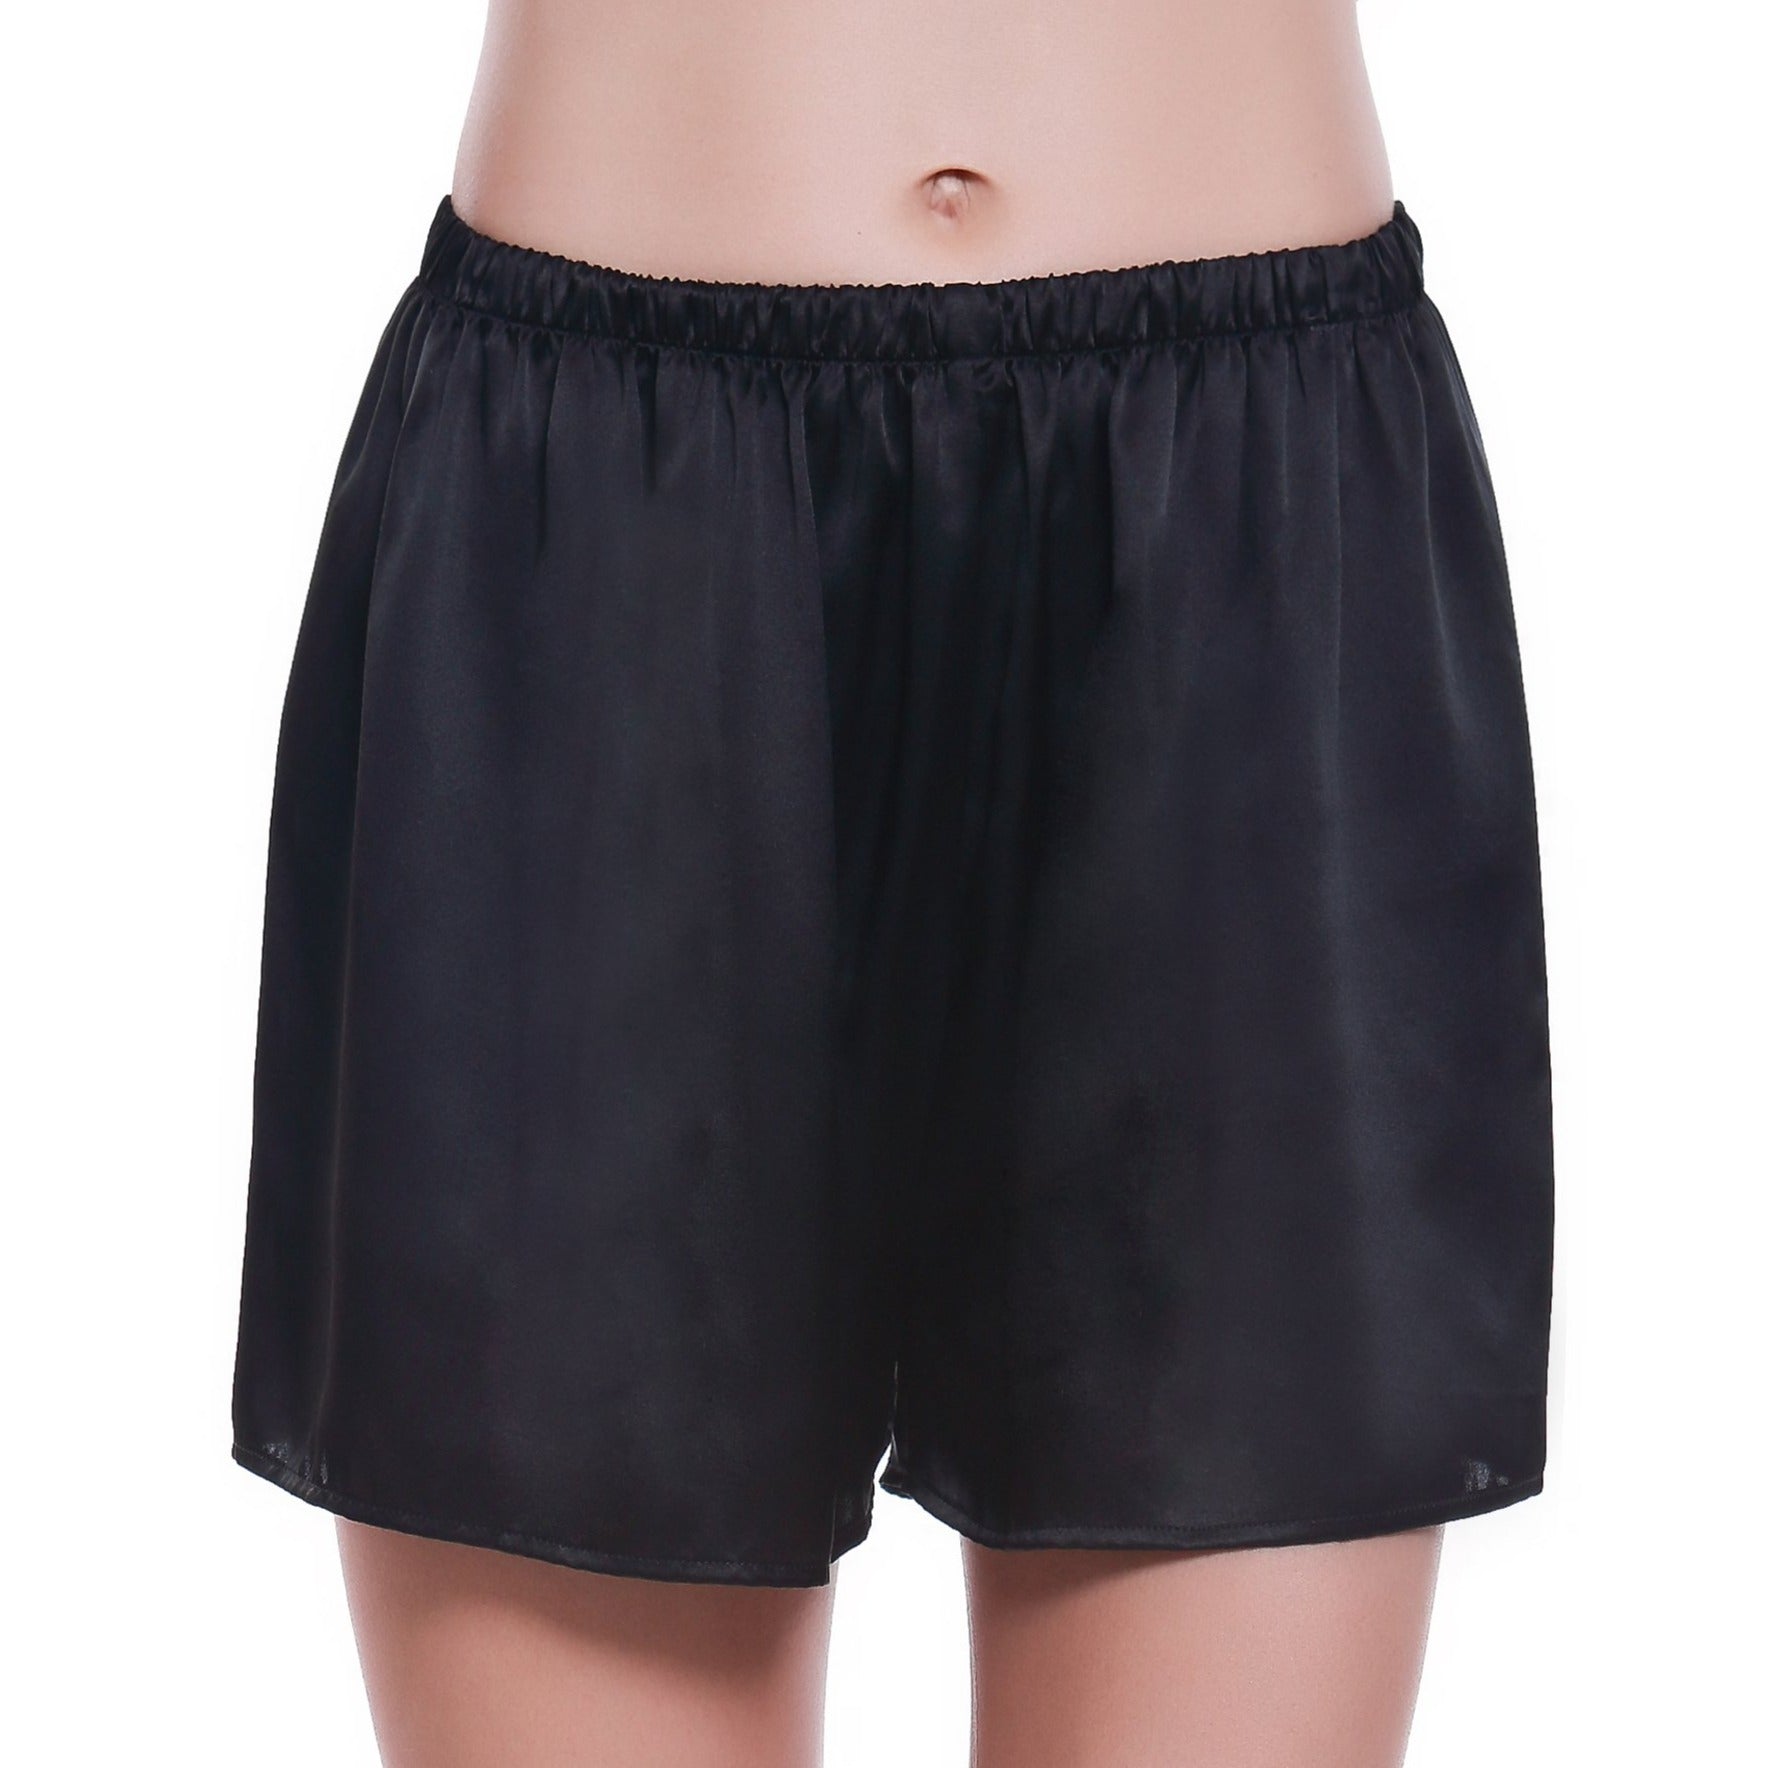 XWSM 100% Mulberry Silk Boxer Briefs Boyshorts Women's Shorts